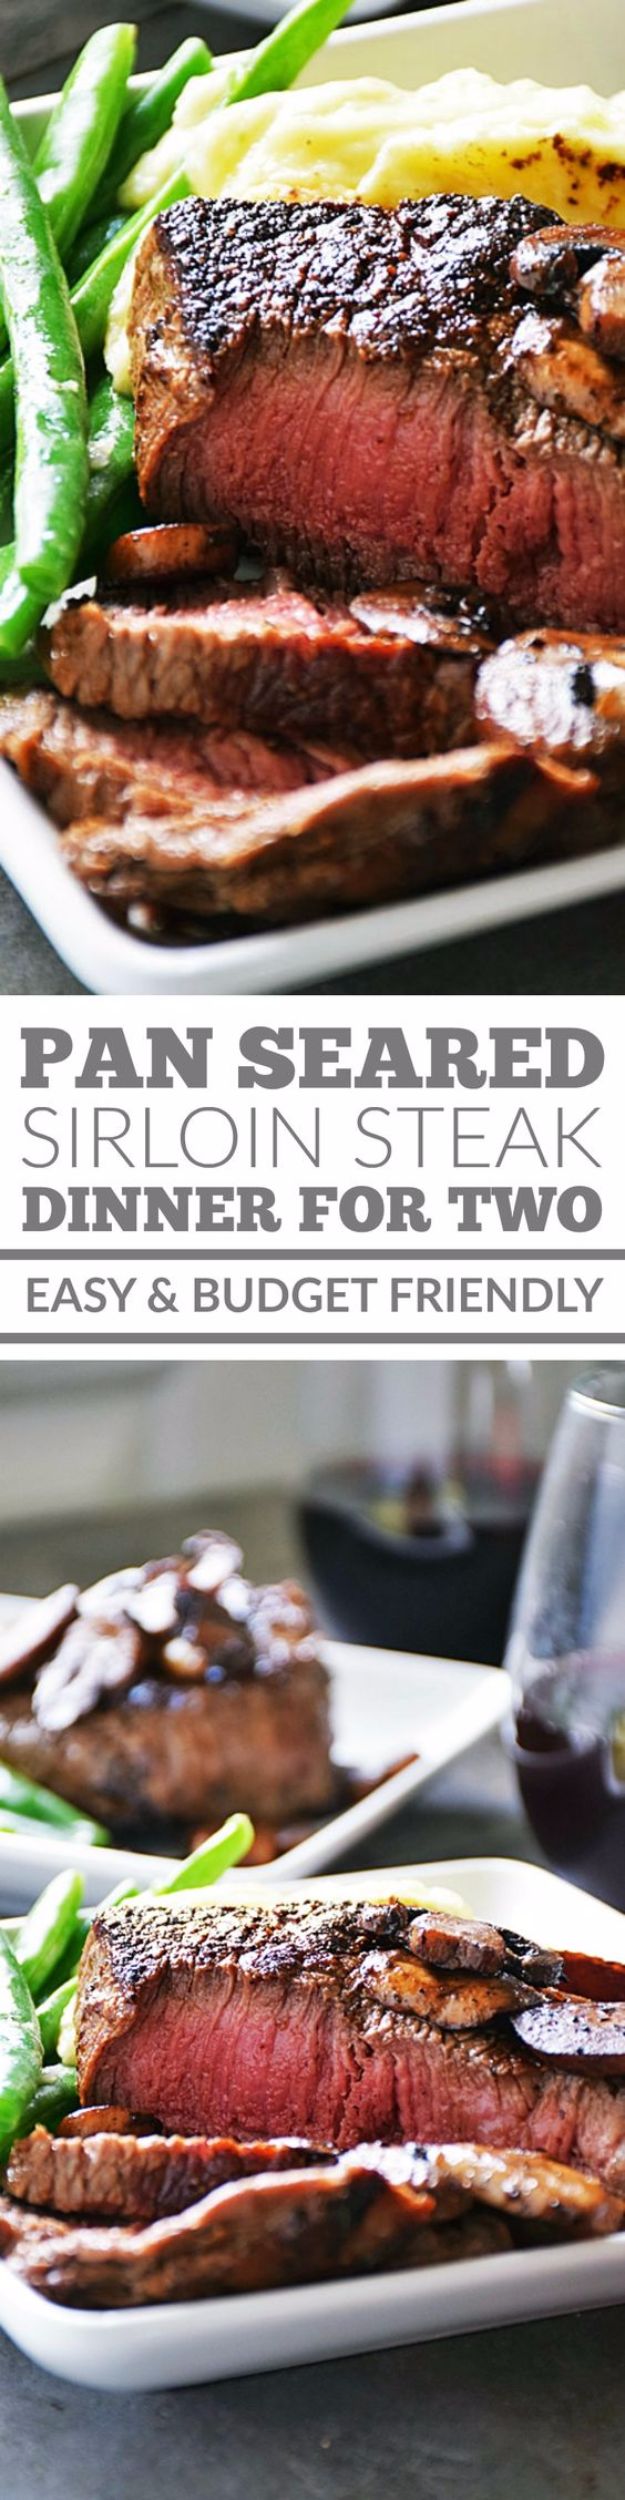 Pan Seared Sirloin Steak Dinner For Two